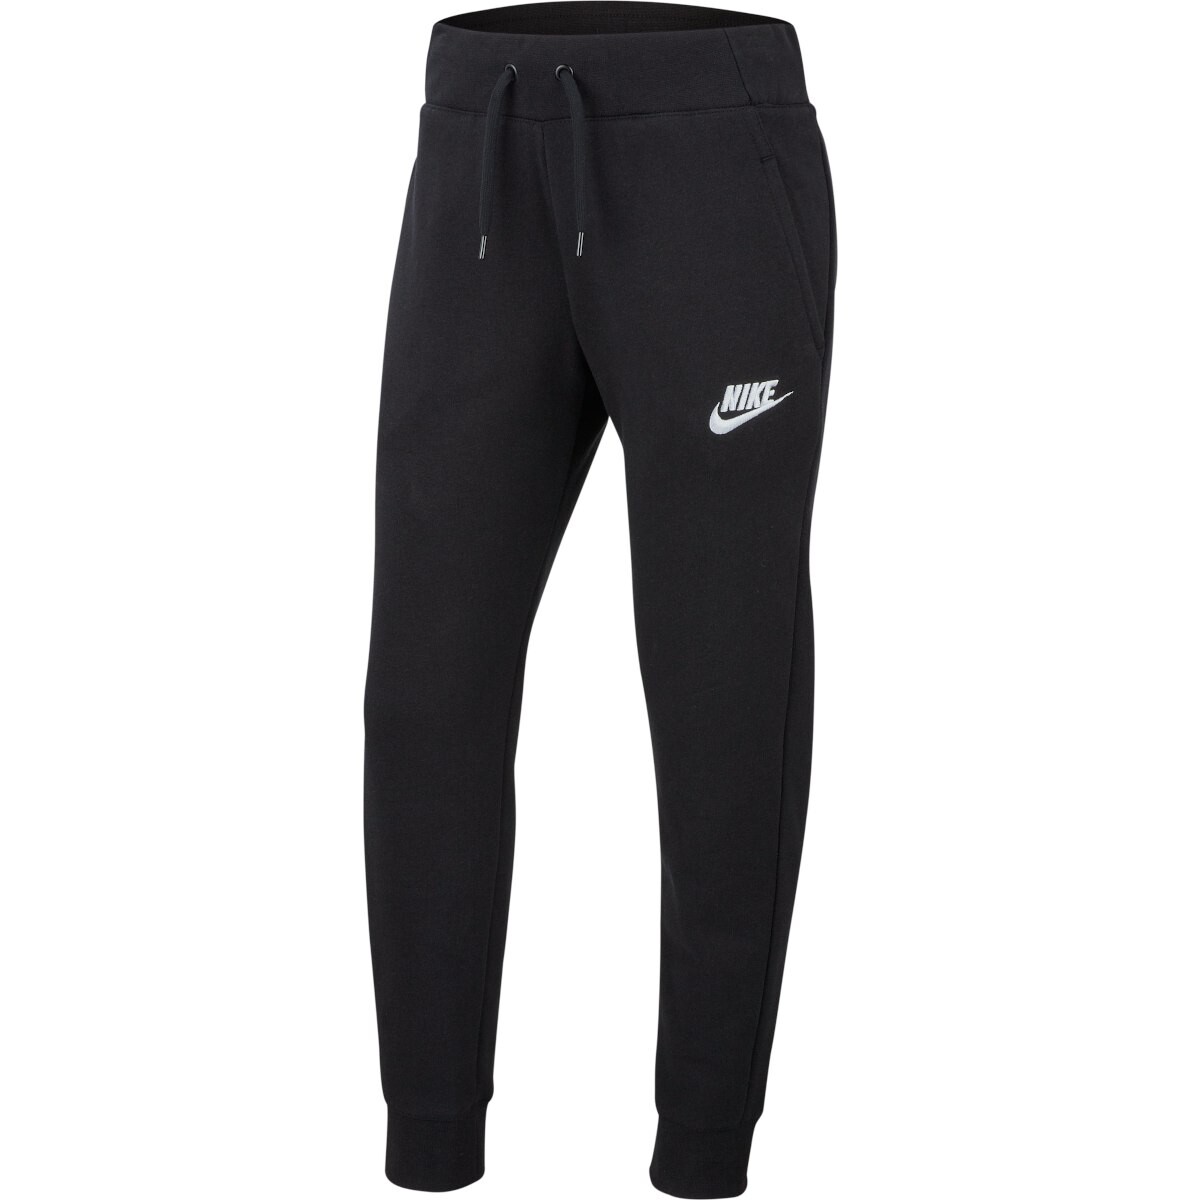 Pantalon Nike Moda Niña Algodon - S/C 